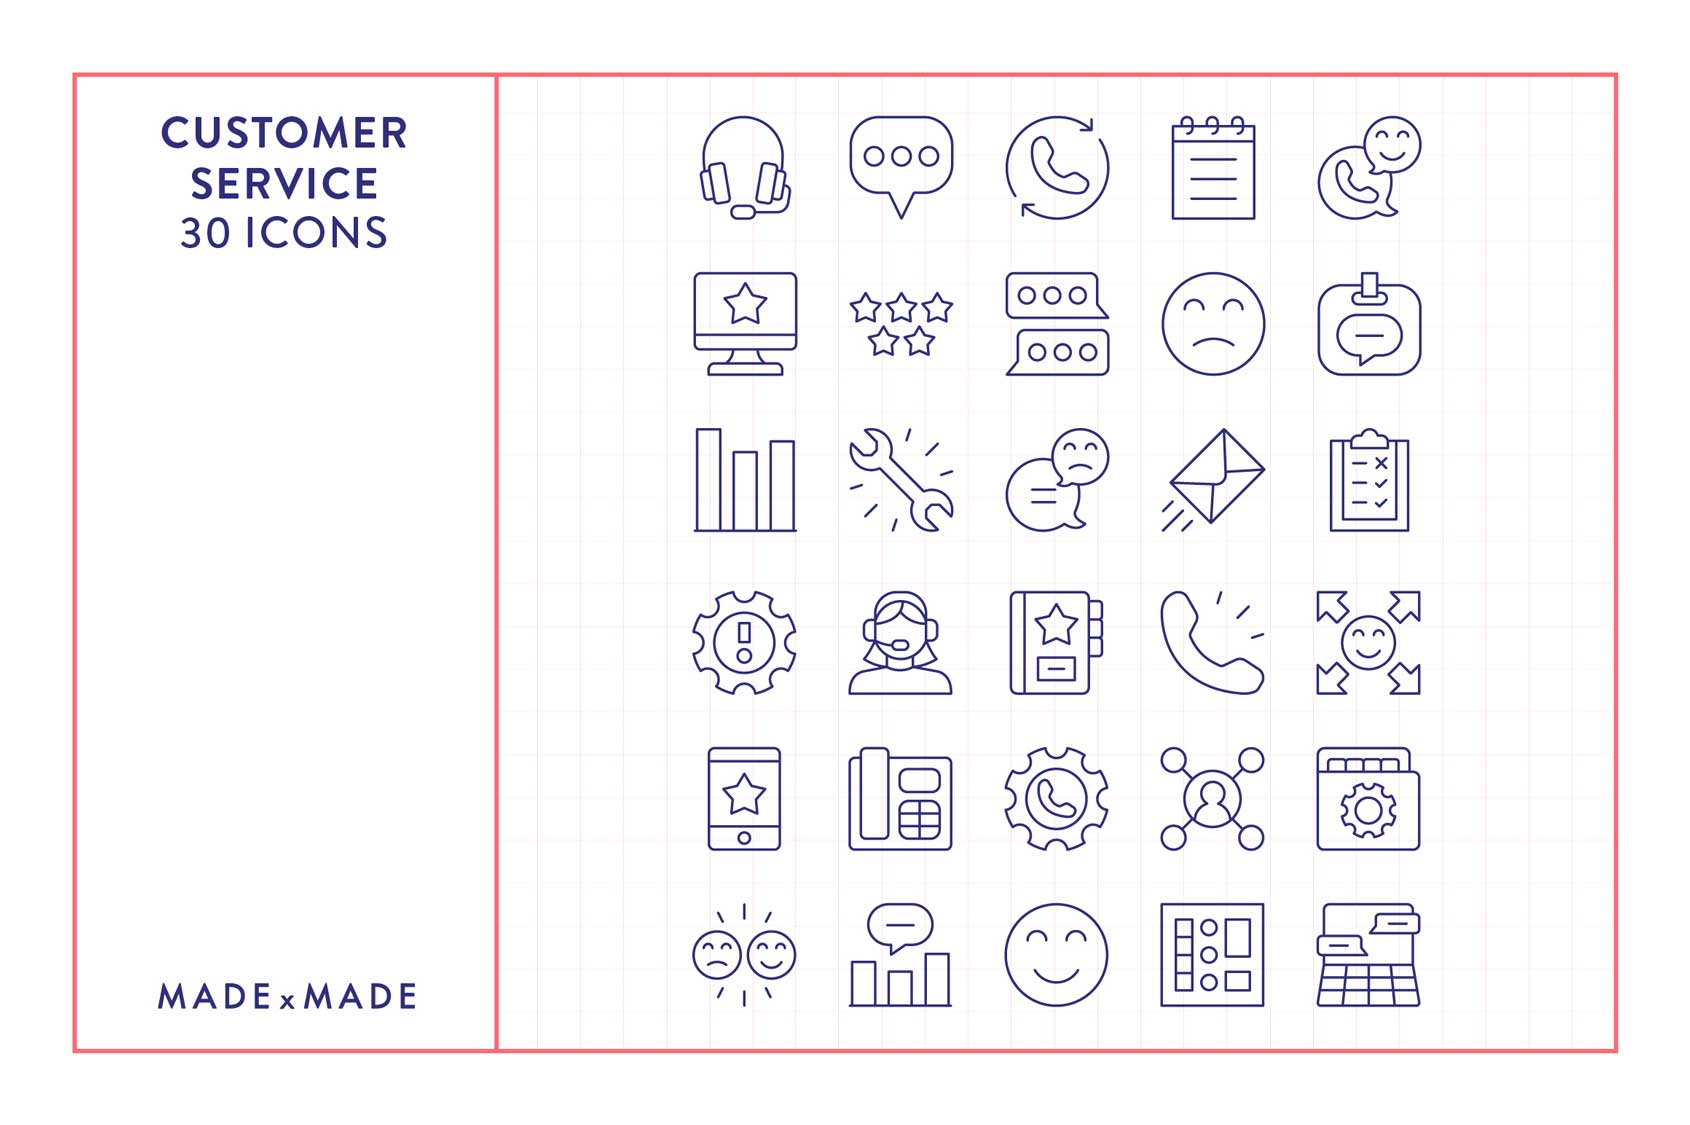 made x made icons customer service